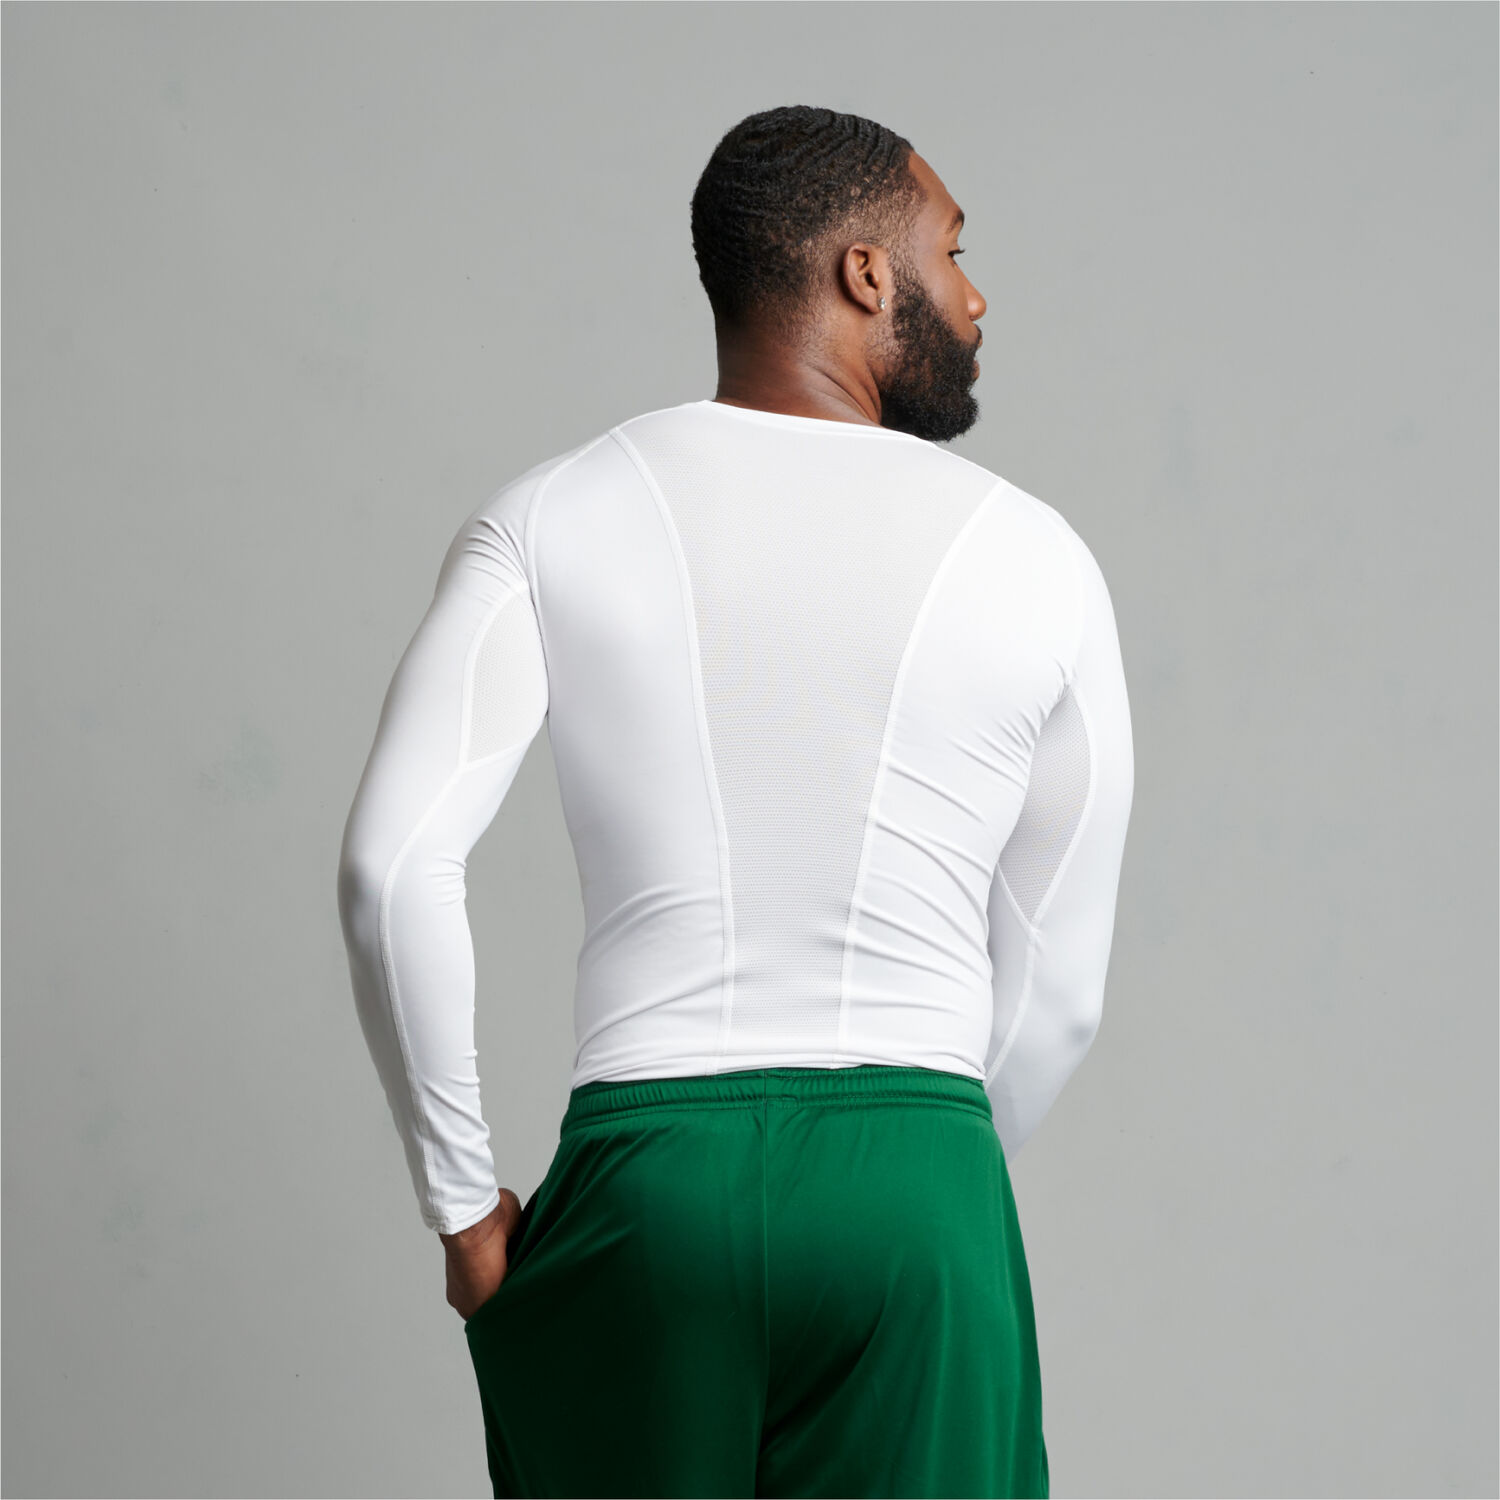 Reebok Men's Long Sleeve Compression Shirt, Color options